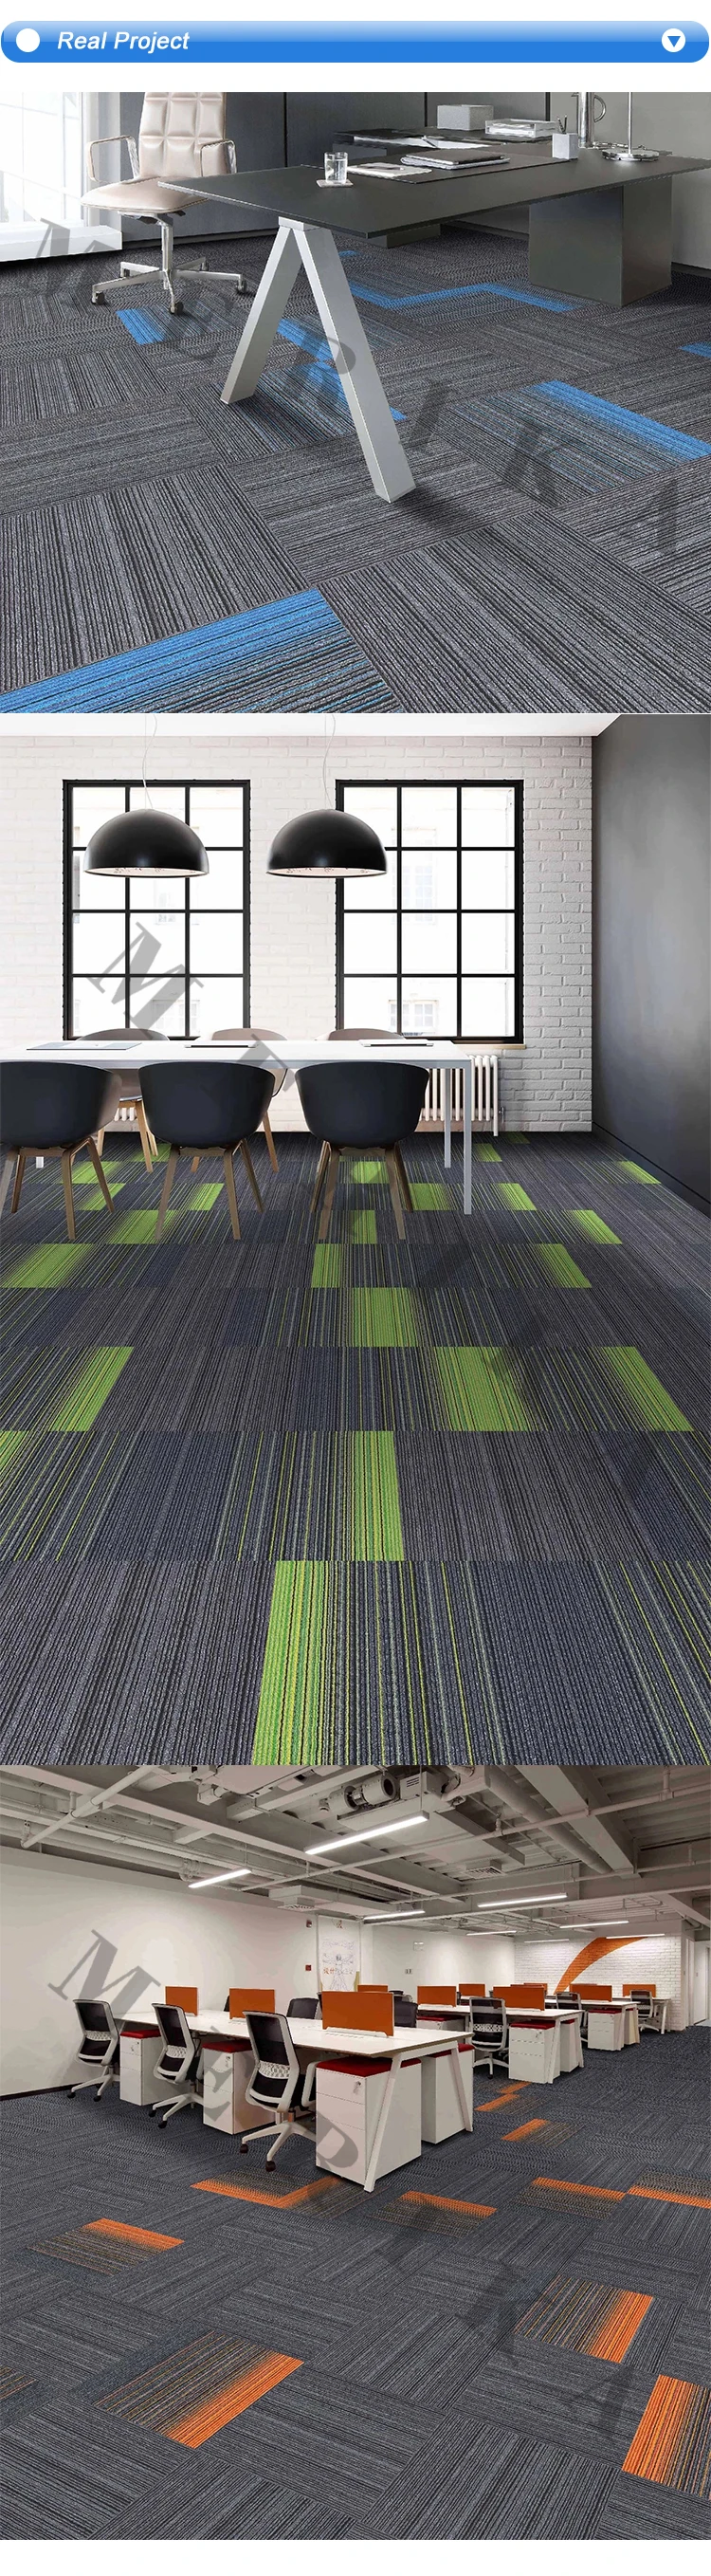 High quality commercial carpet fireproof modular office carpet tiles